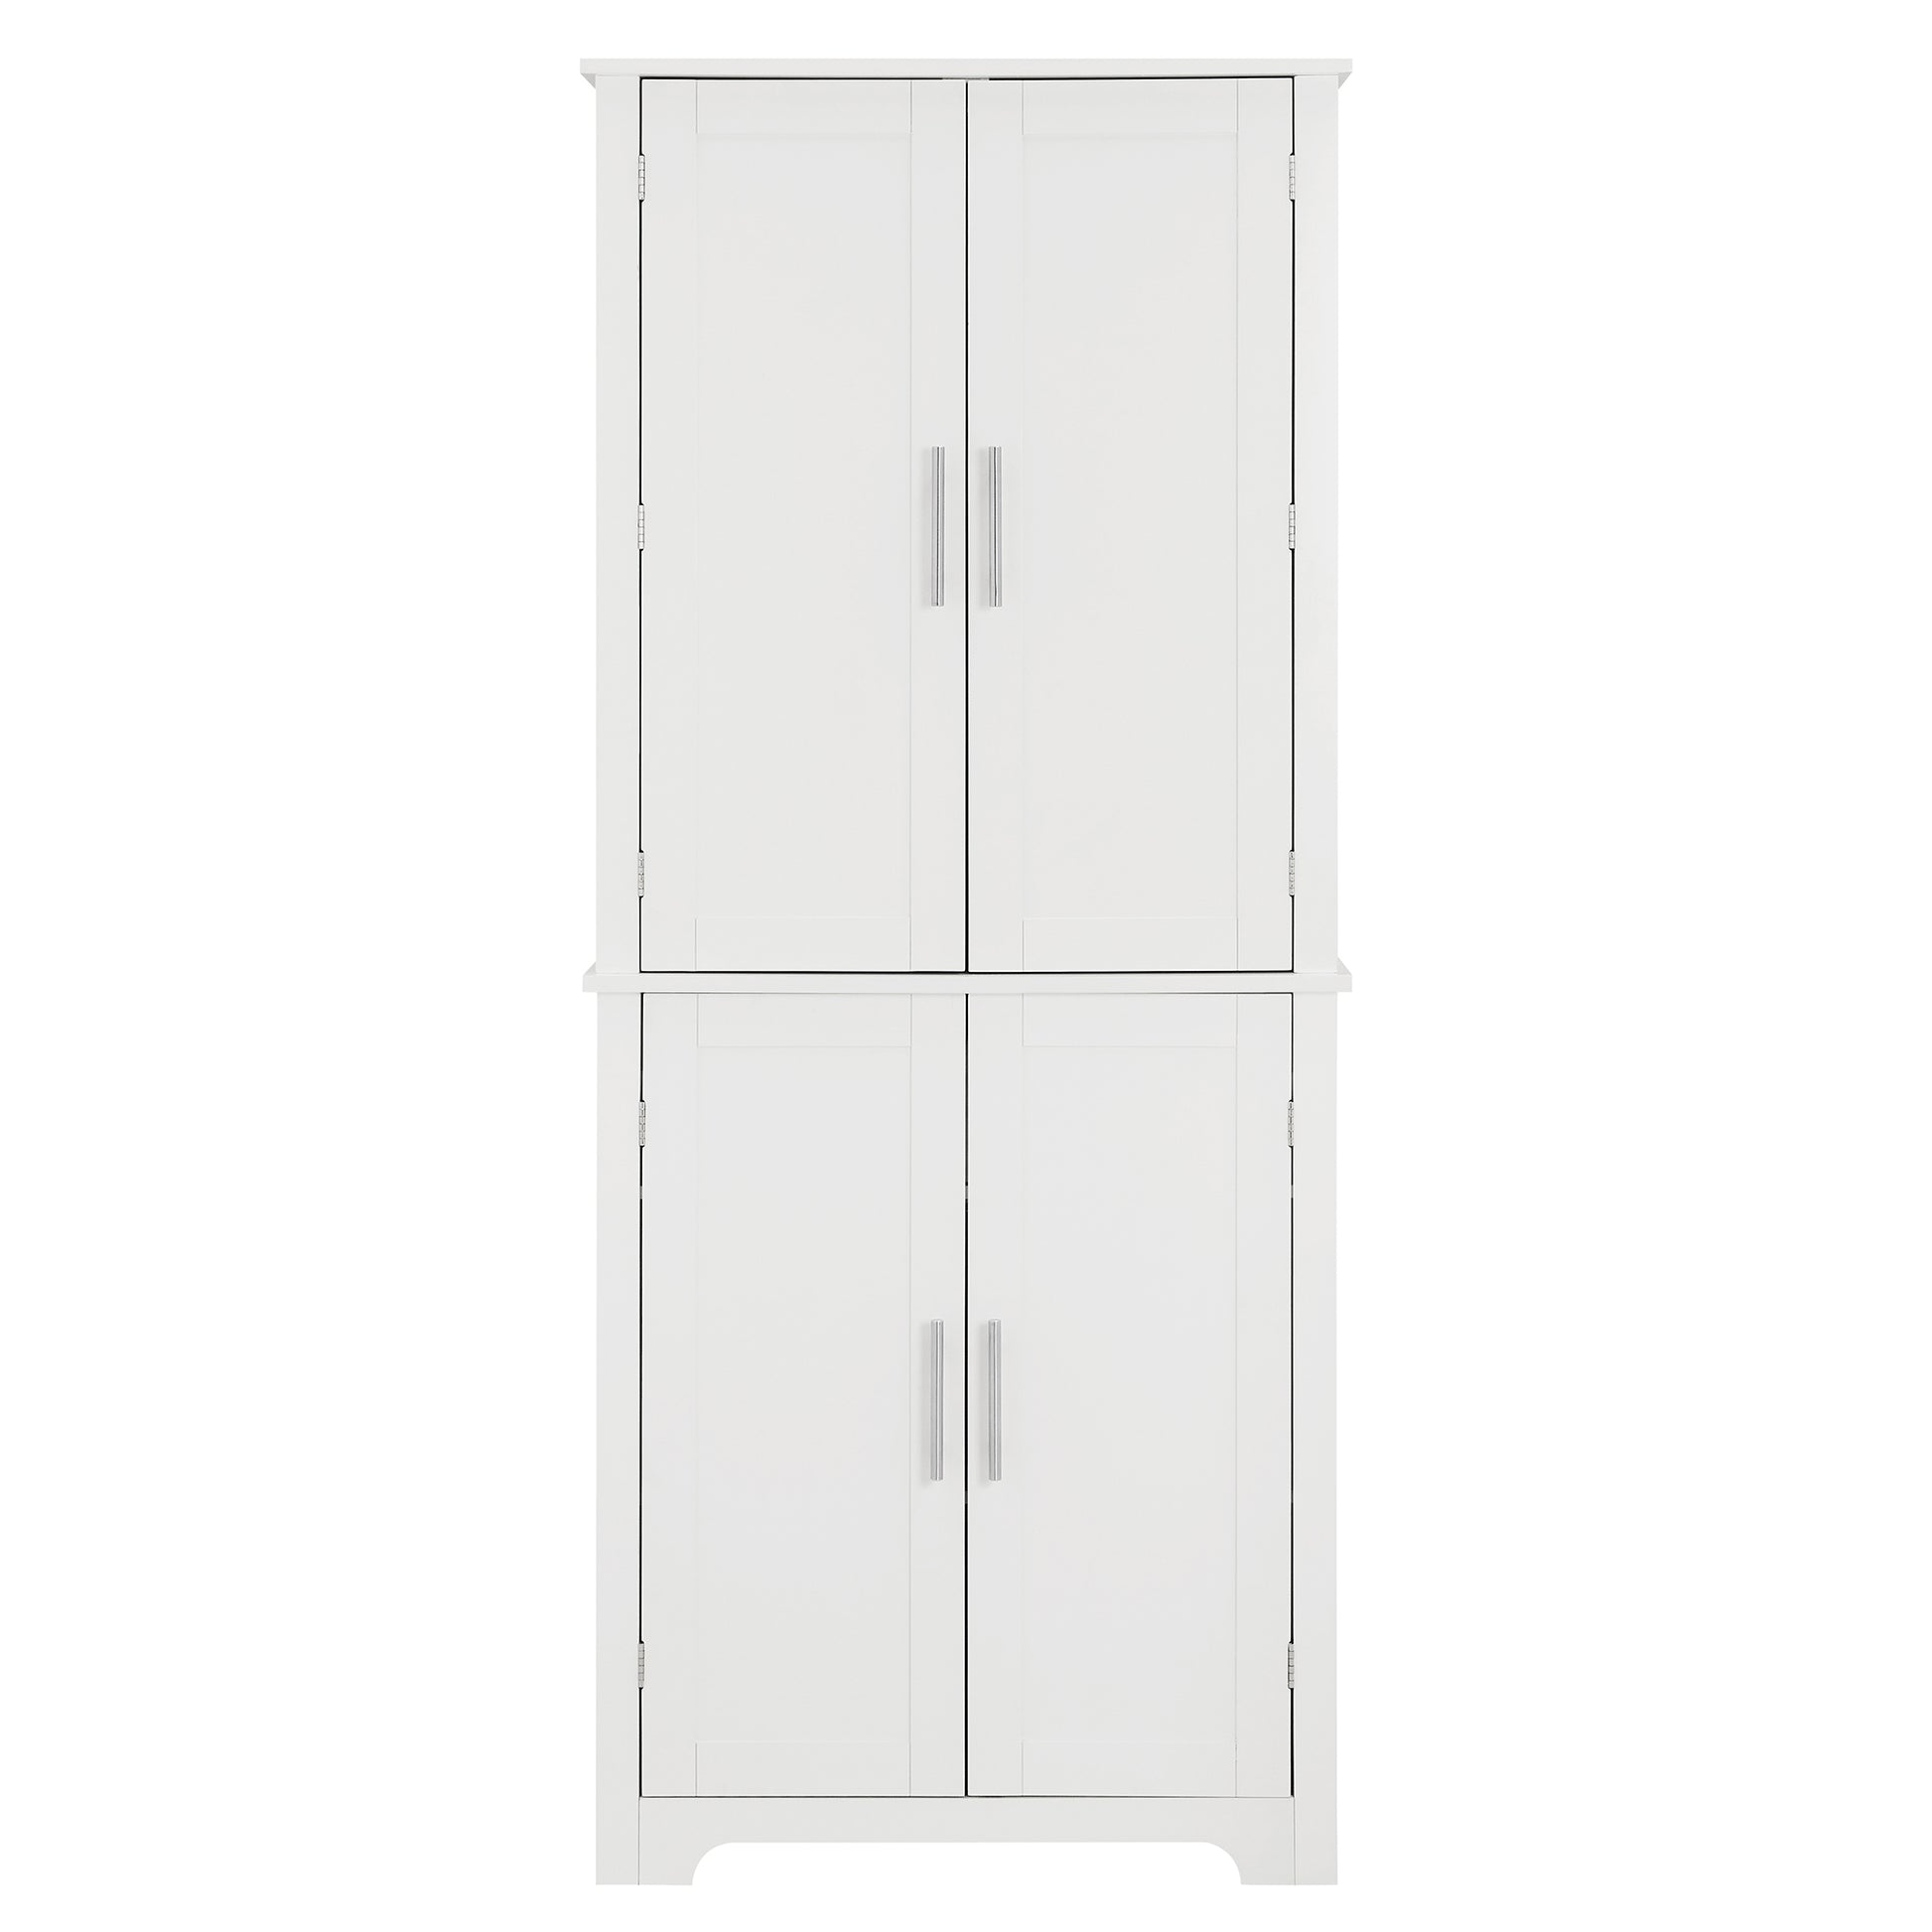 Bathroom cabinets, storage cabinets, cupboards white-mdf